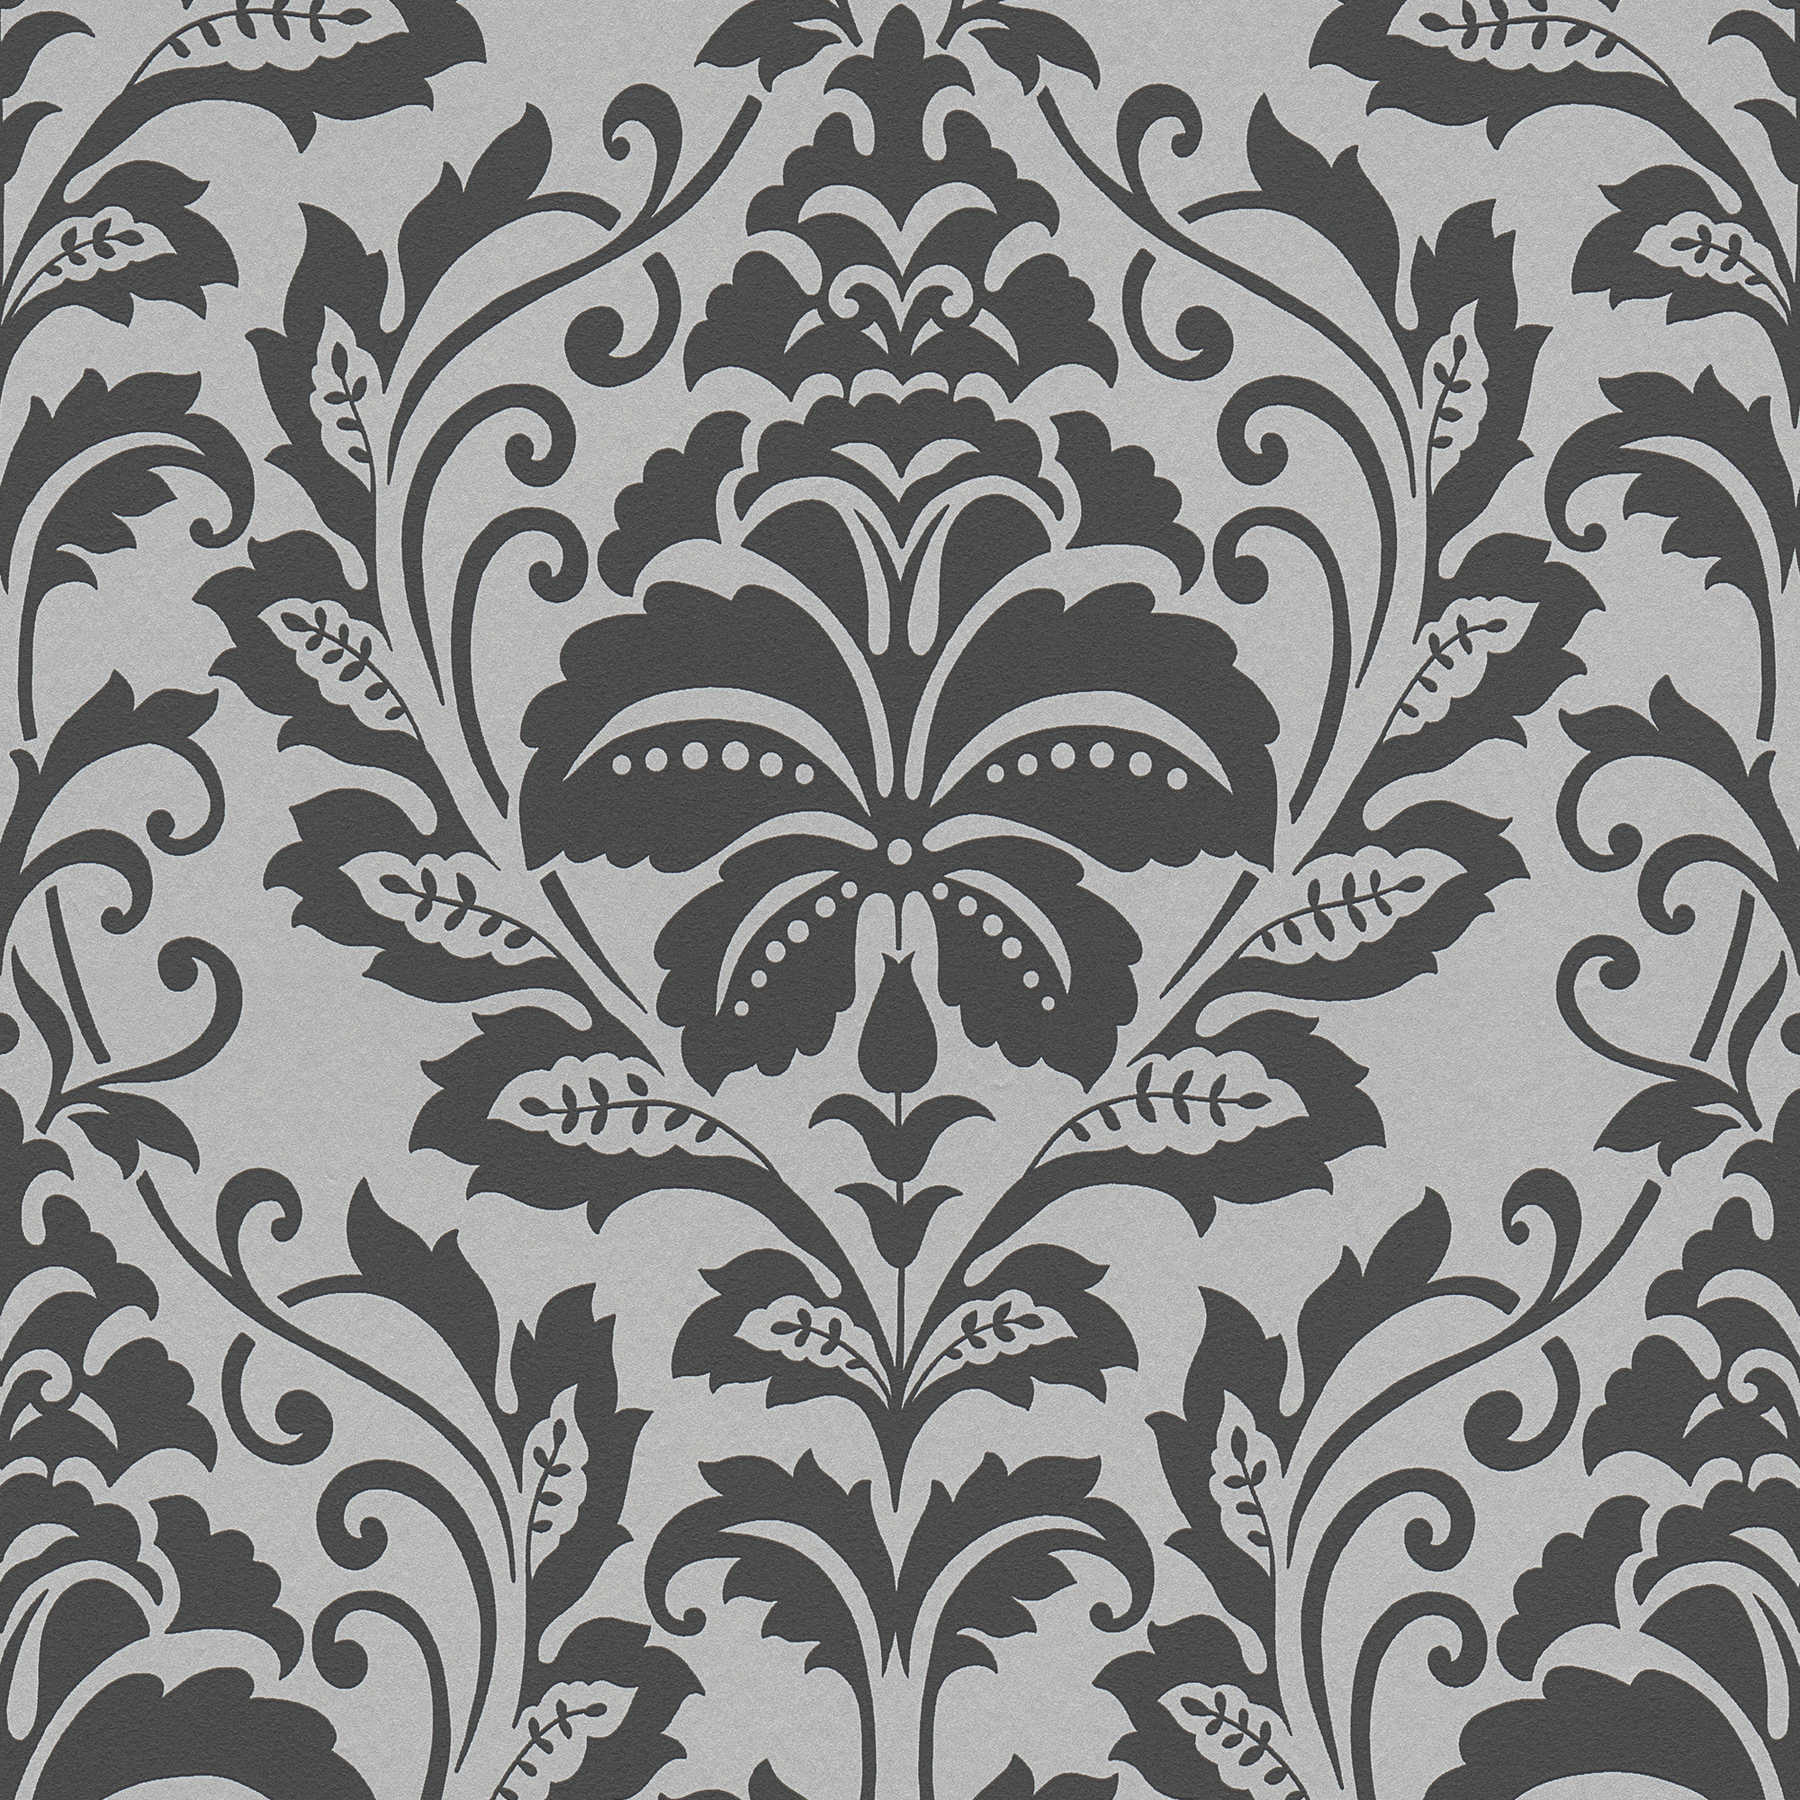 Neo-Klassik Ornament Tapete, floral – Grau, Schwarz
